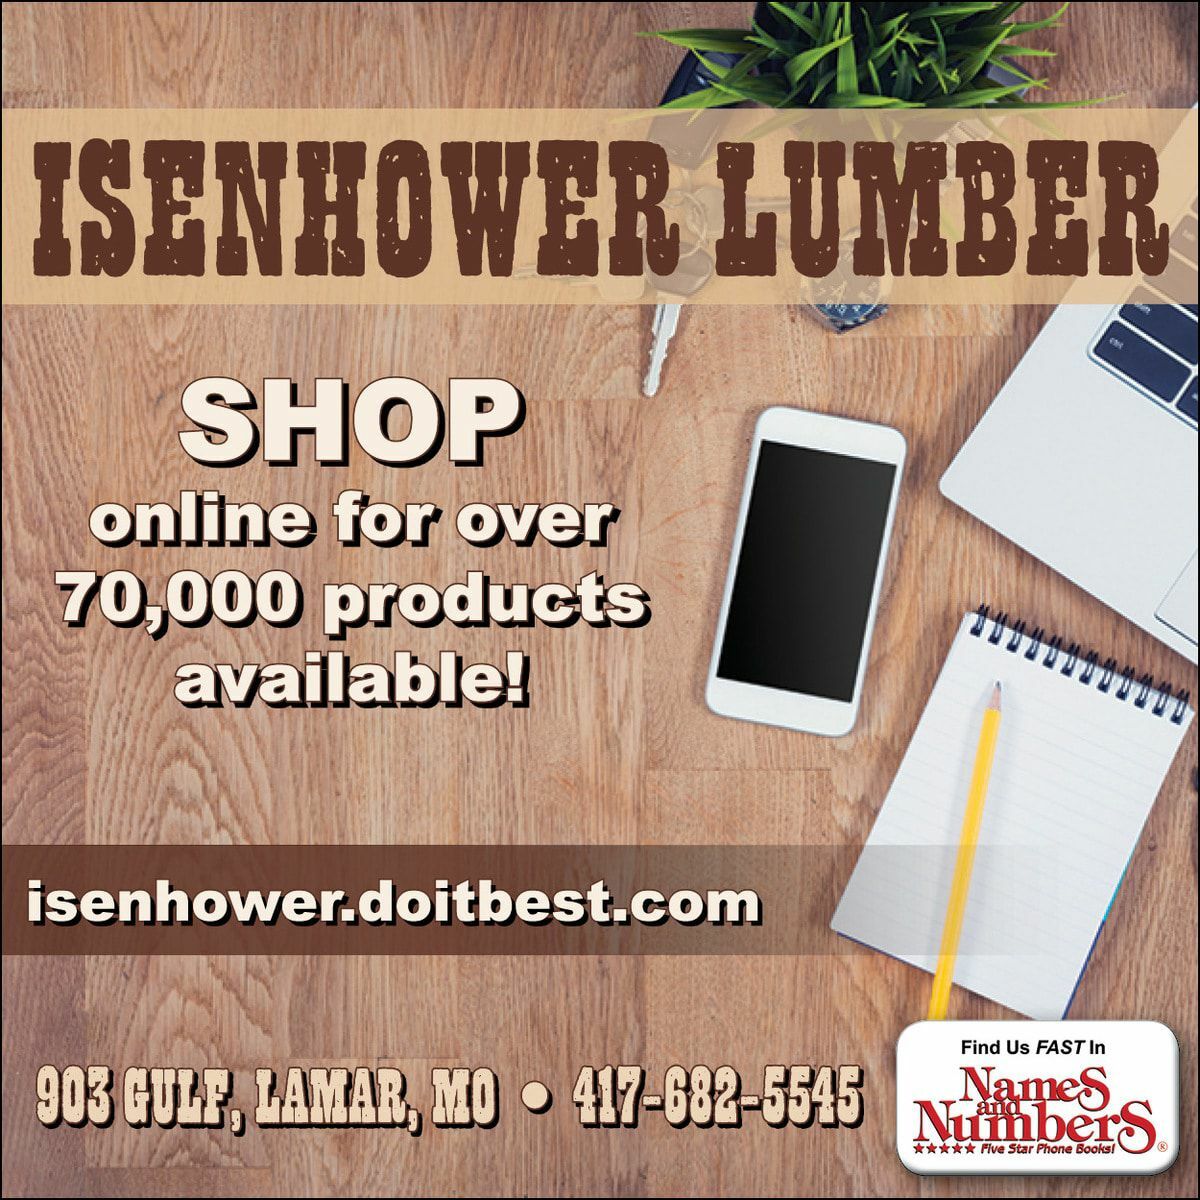 Isenhower Lumber Company